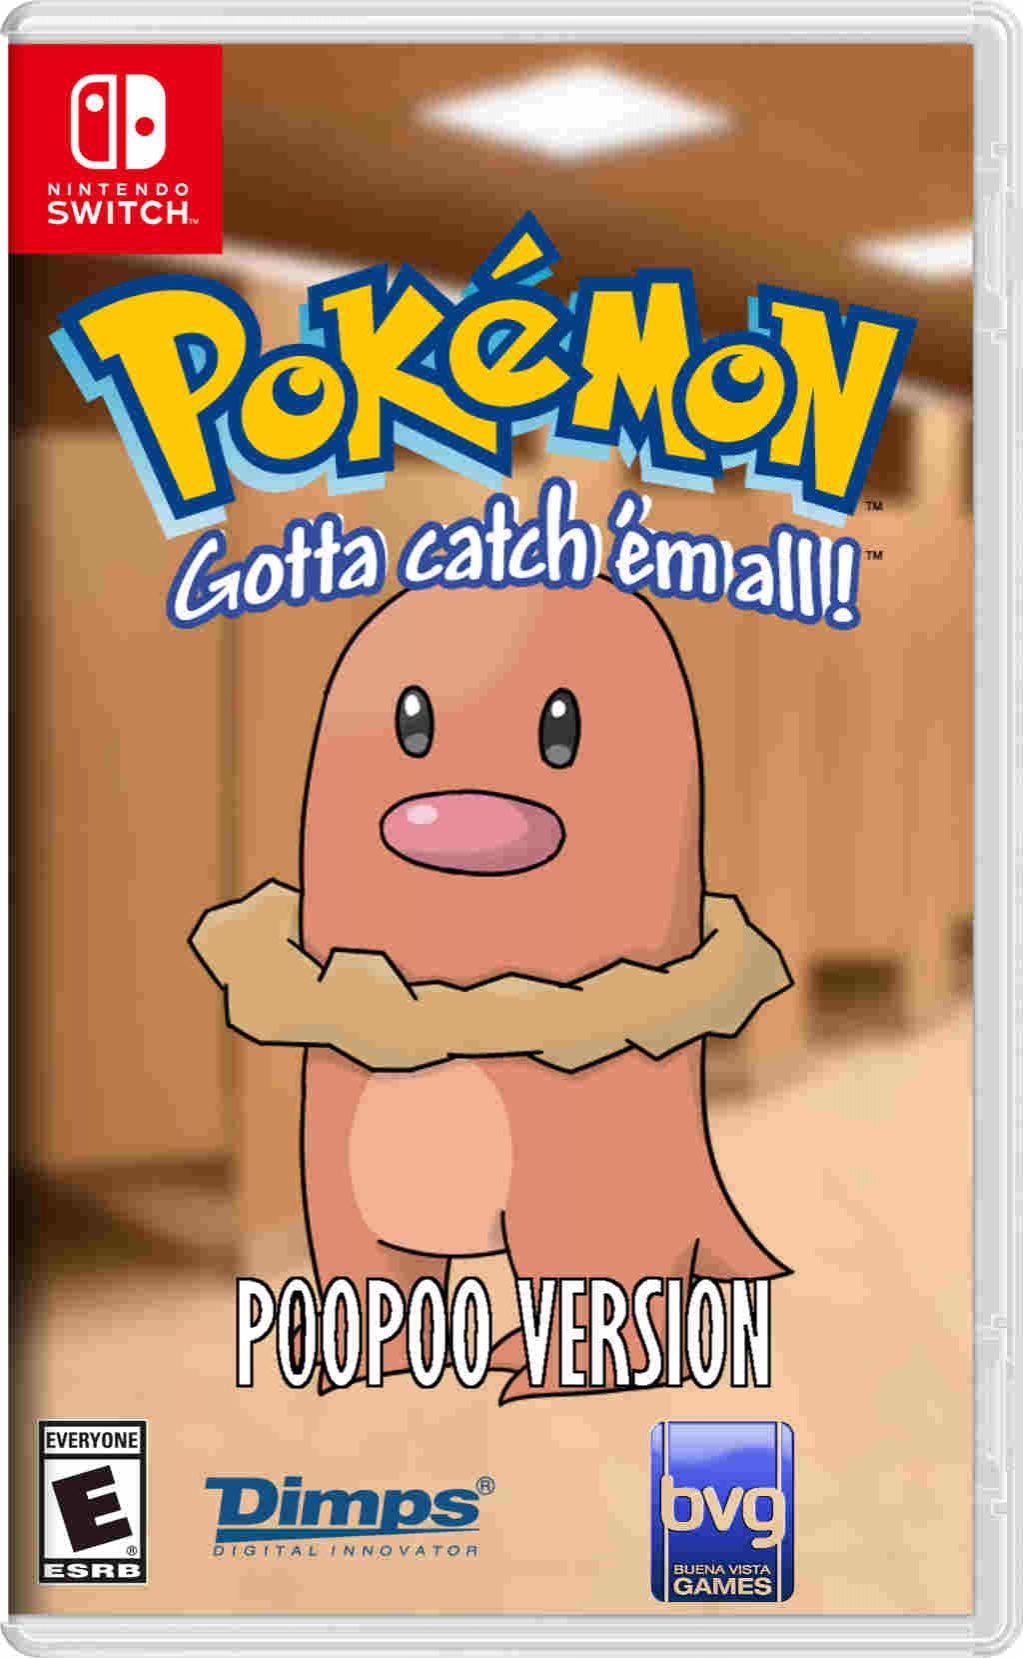 Pokémon Poopoo Version box cover